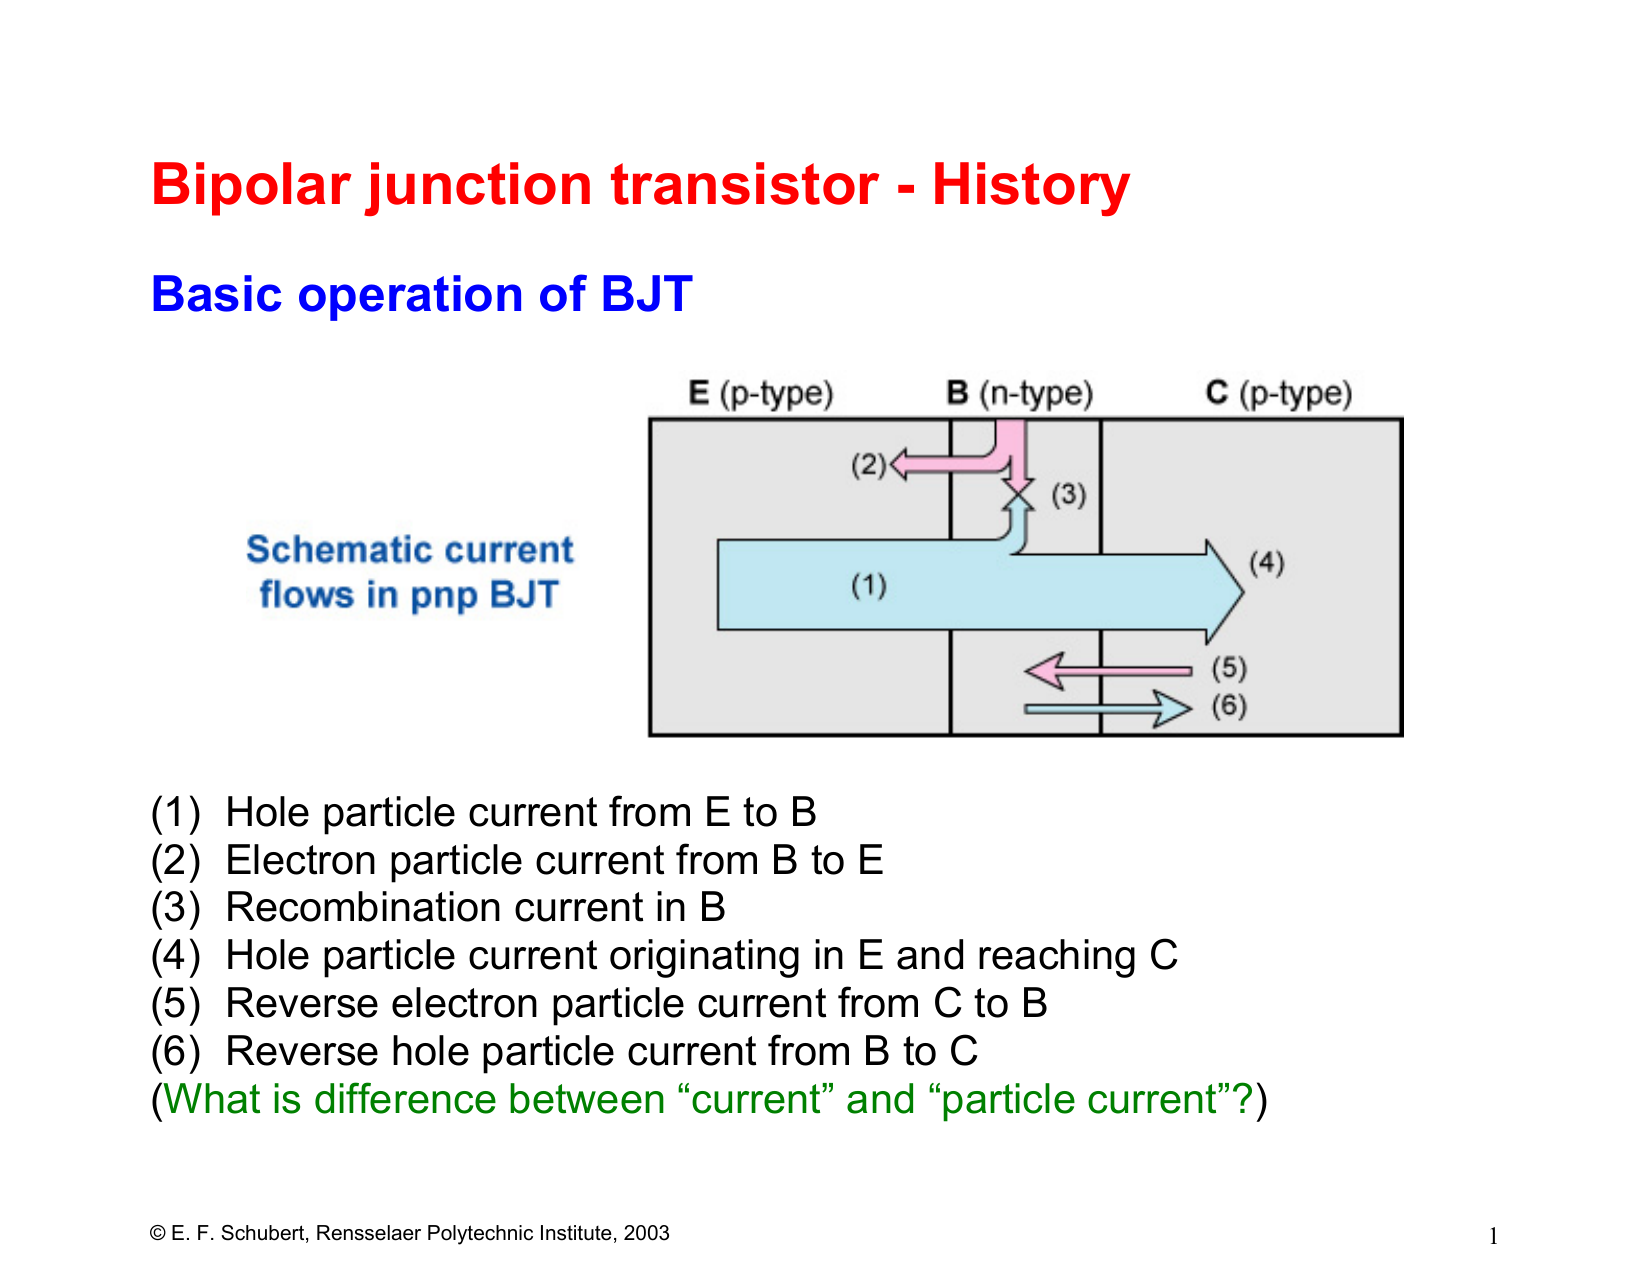 bjt transistor digikey